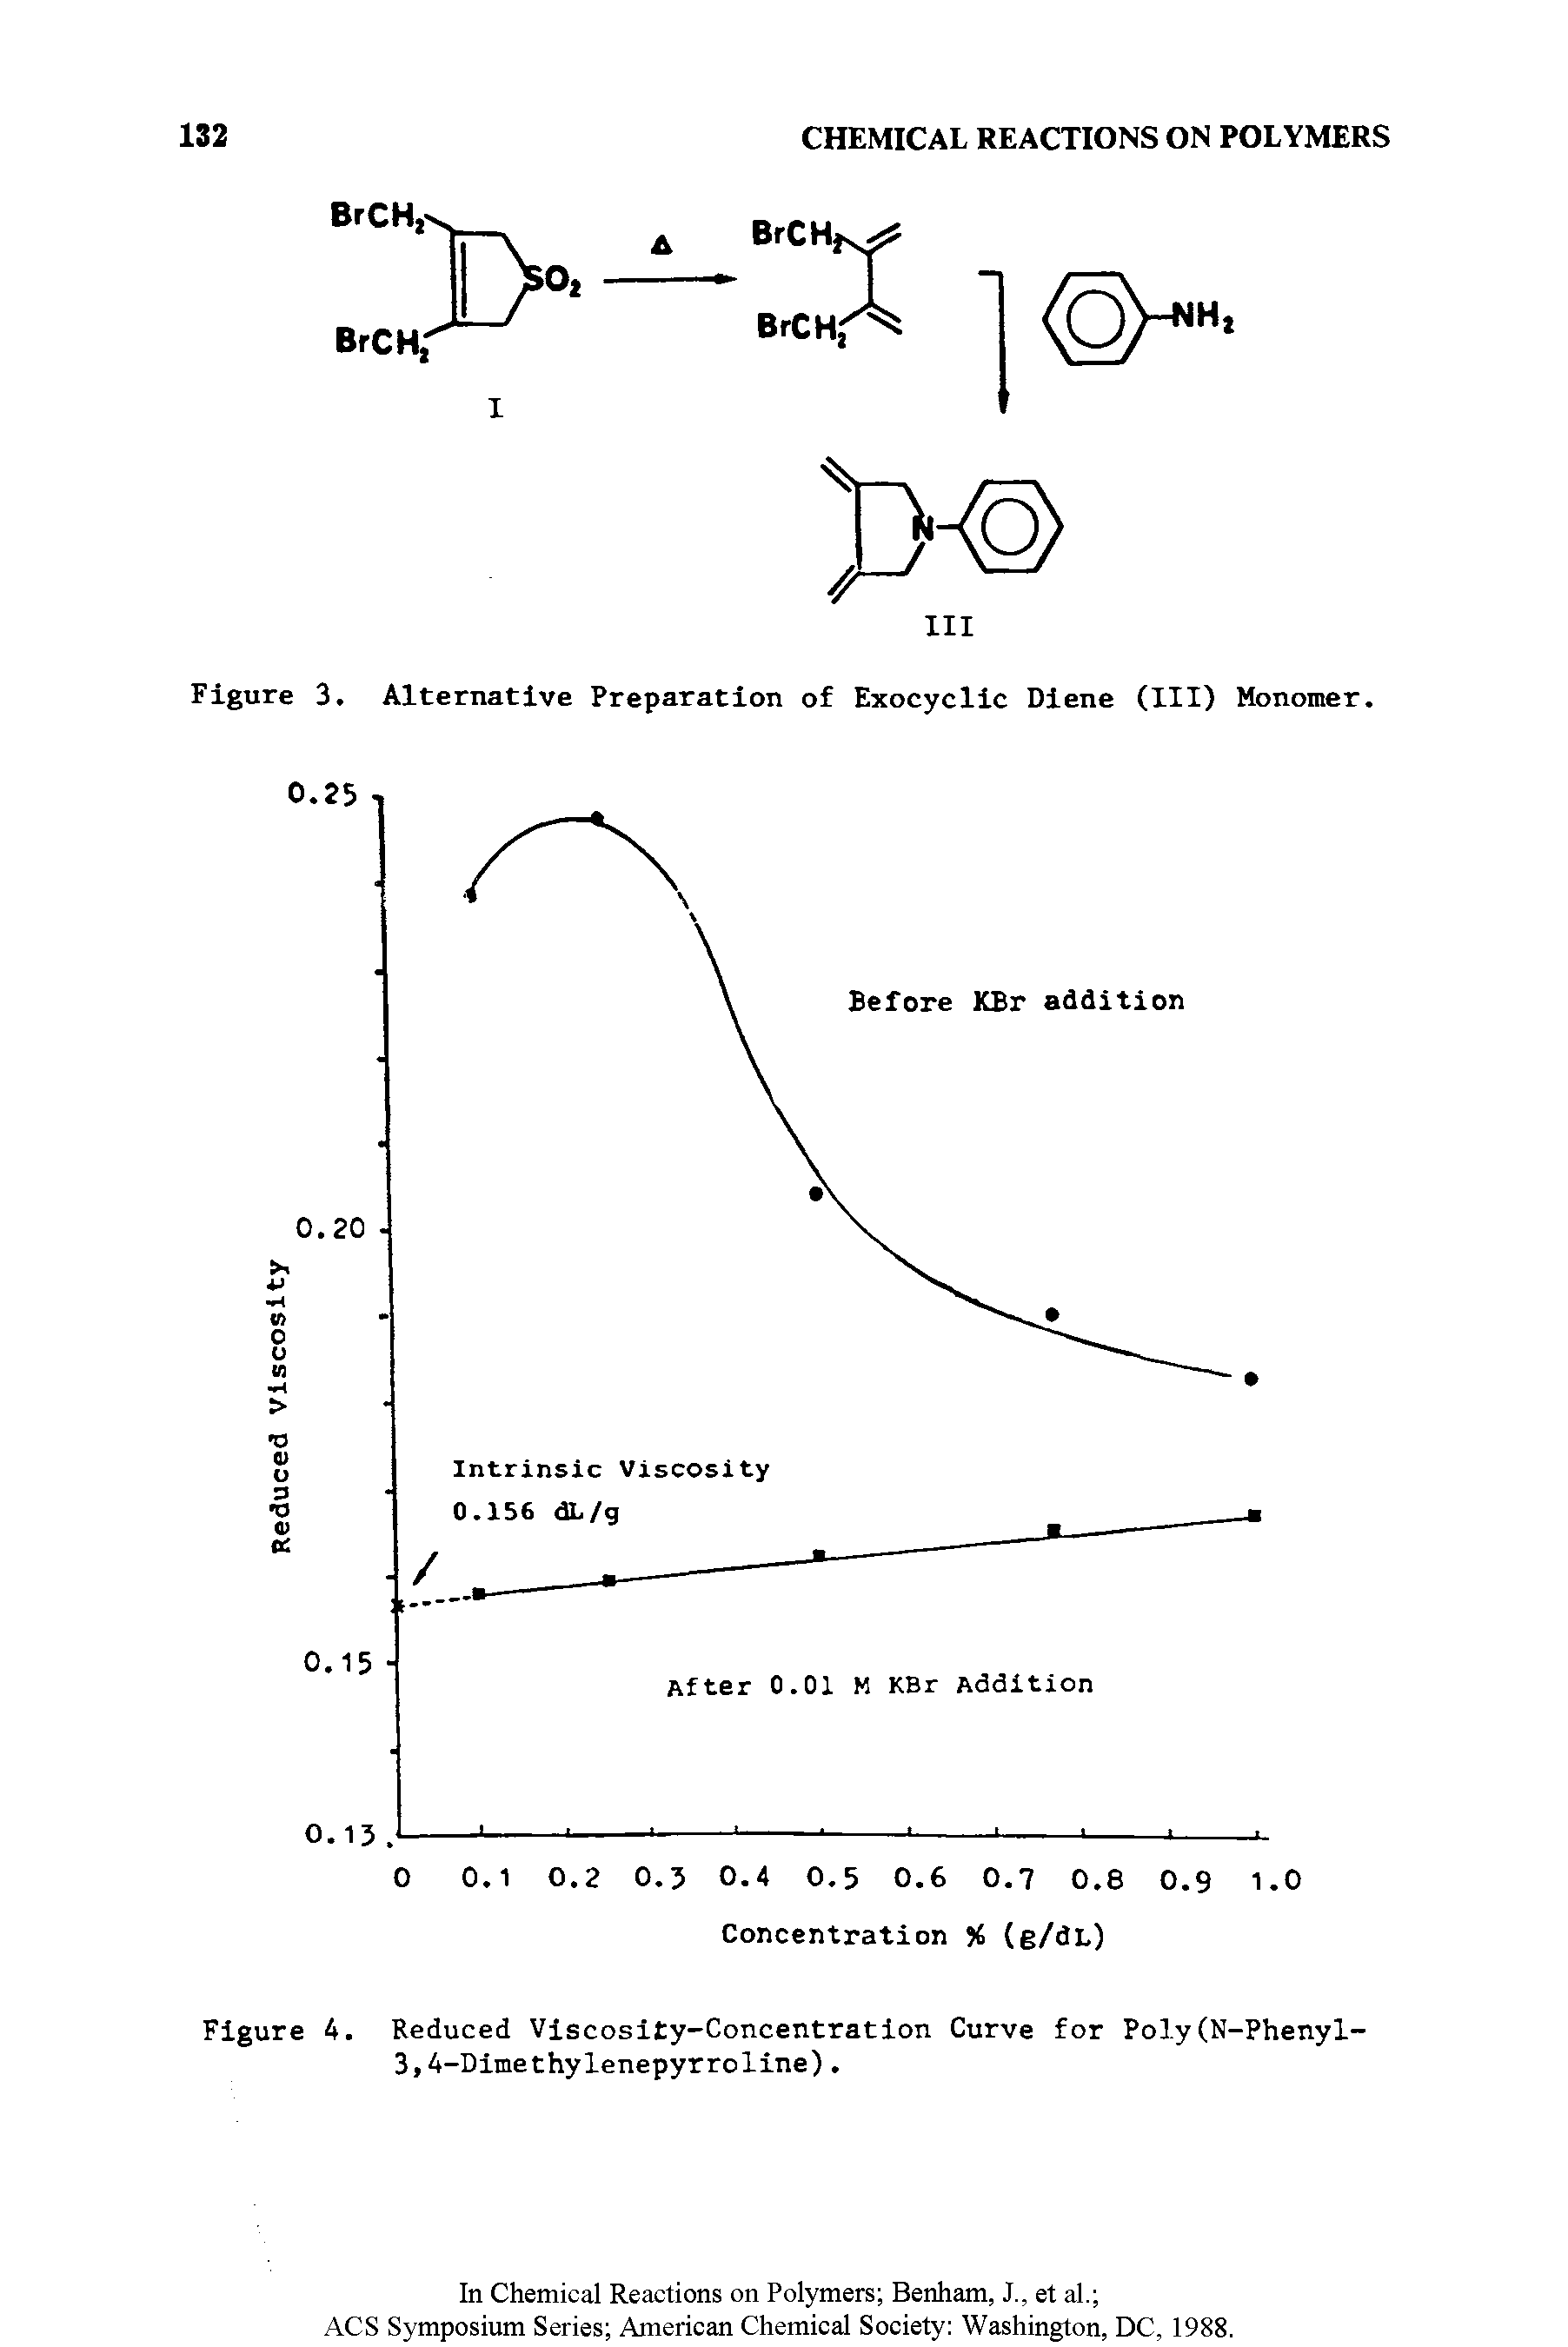 Figure 4. Reduced Viscosity-Concentration Curve for Poly(N-Phenyl-3,4-Dimethylenepyrroline).